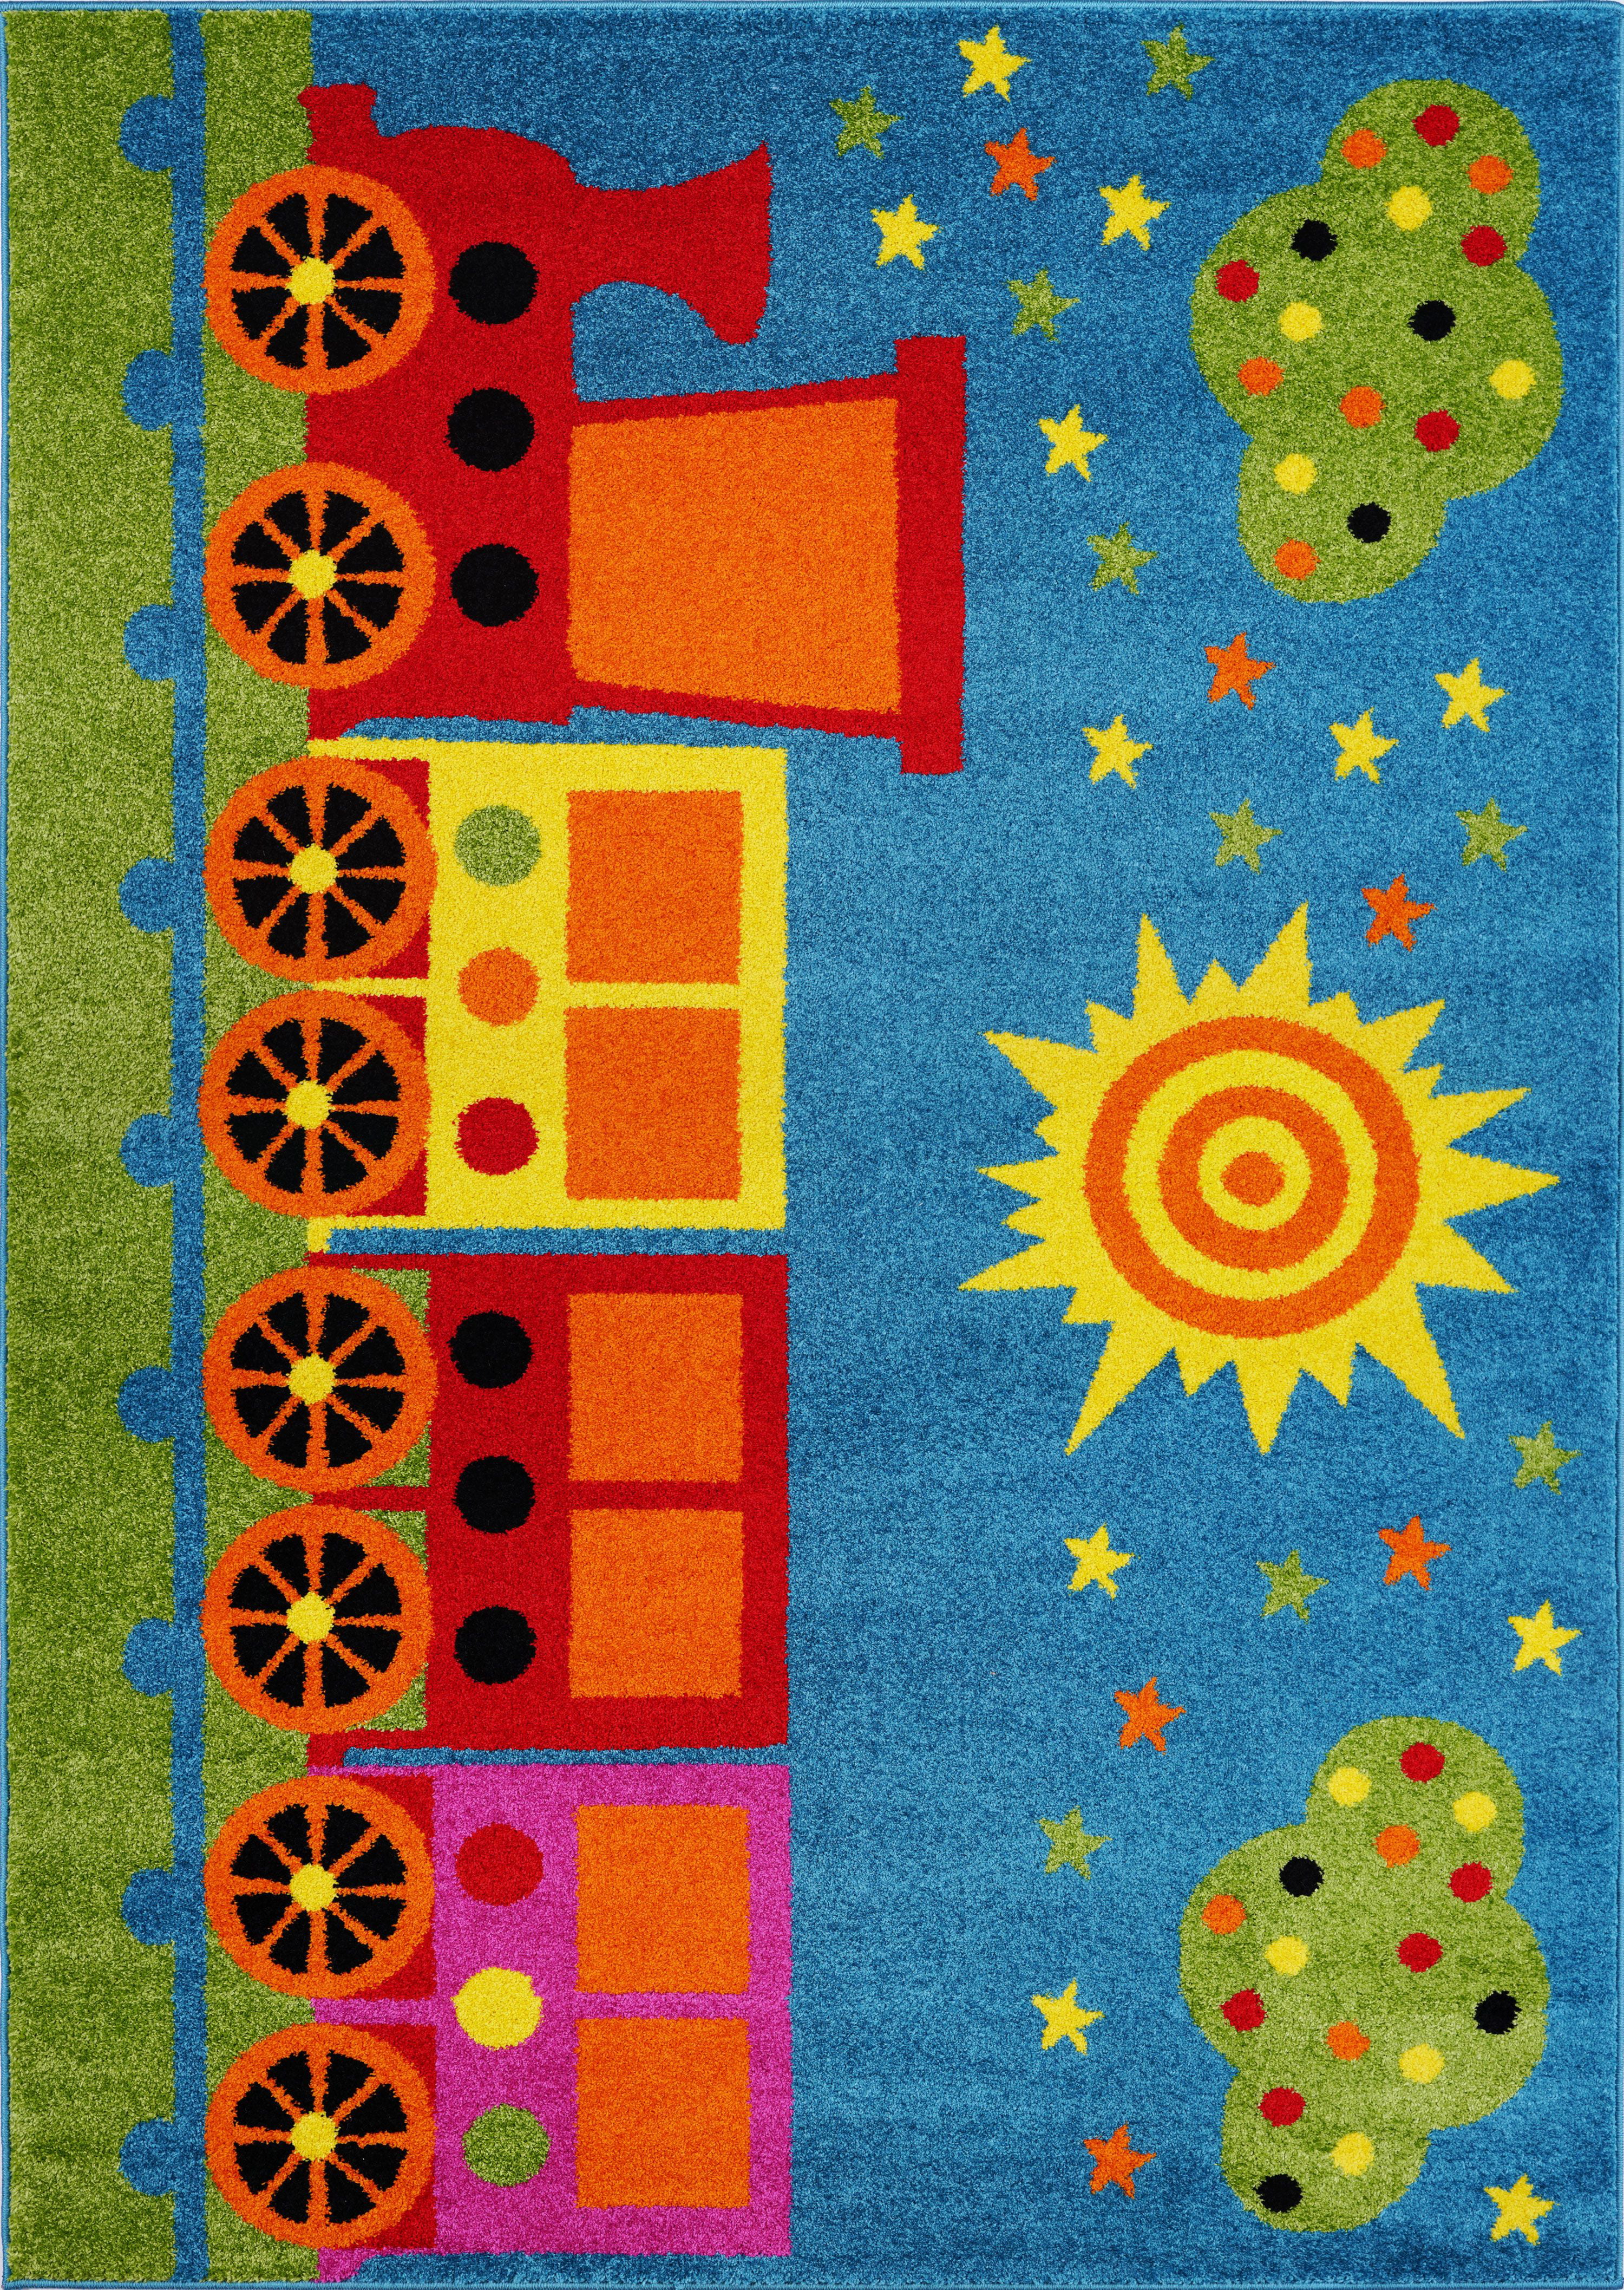 Owls Theme Adorable Cute Durable Kids Area Rug Carpet 4x5 5x7 6x9 8x10 